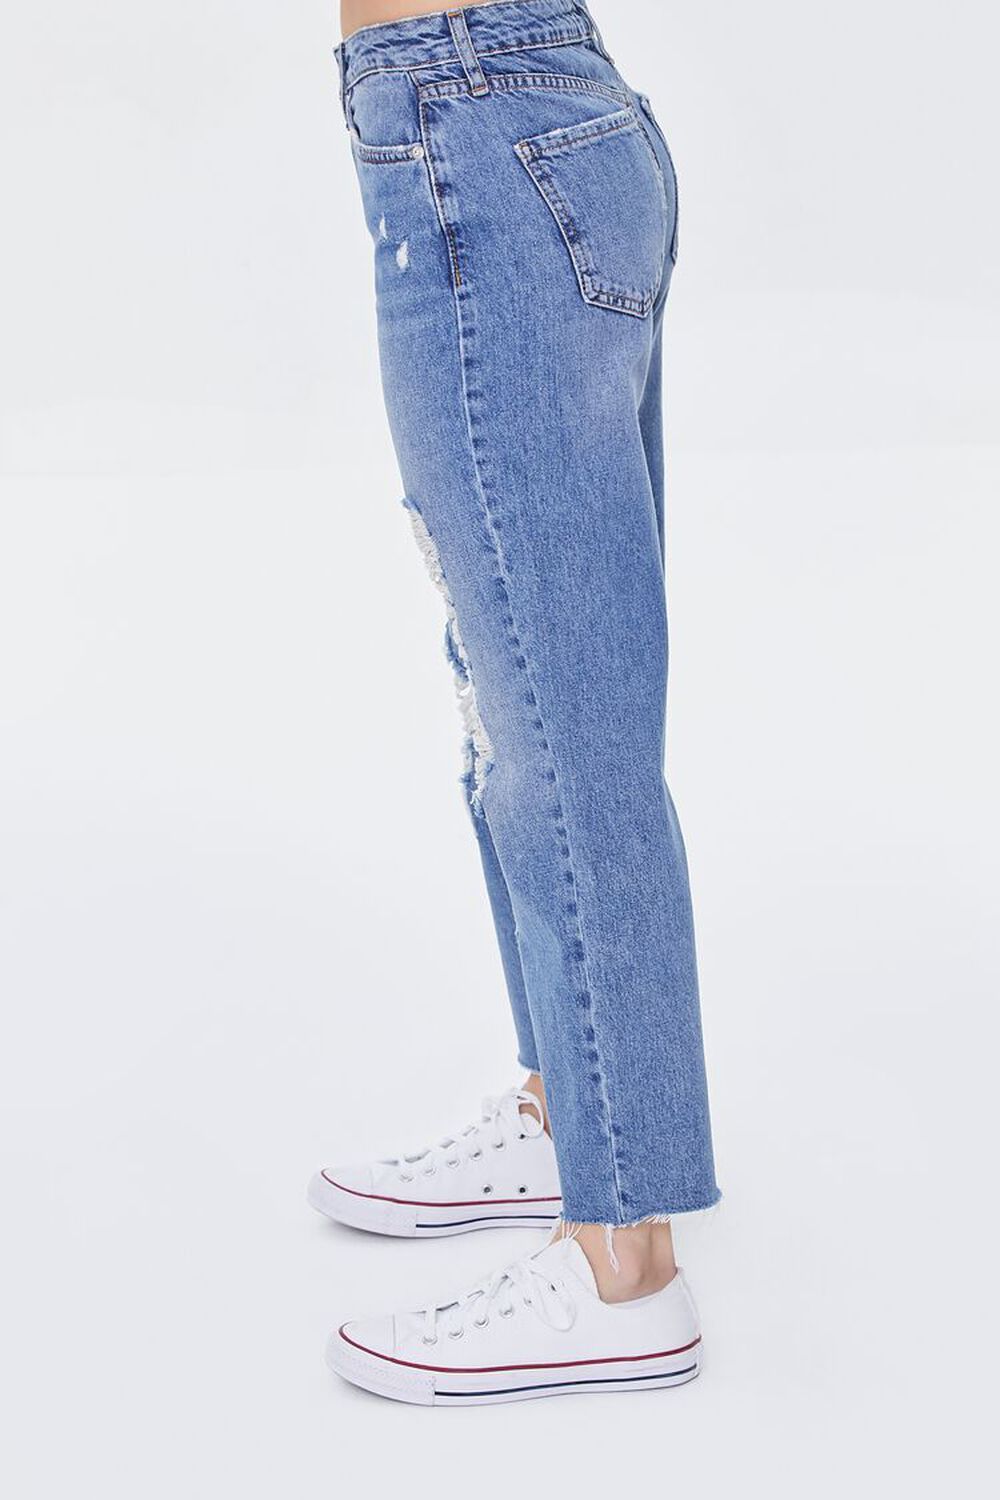 MEDIUM DENIM Frayed Mid-Rise Boyfriend Petite Jeans, image 3